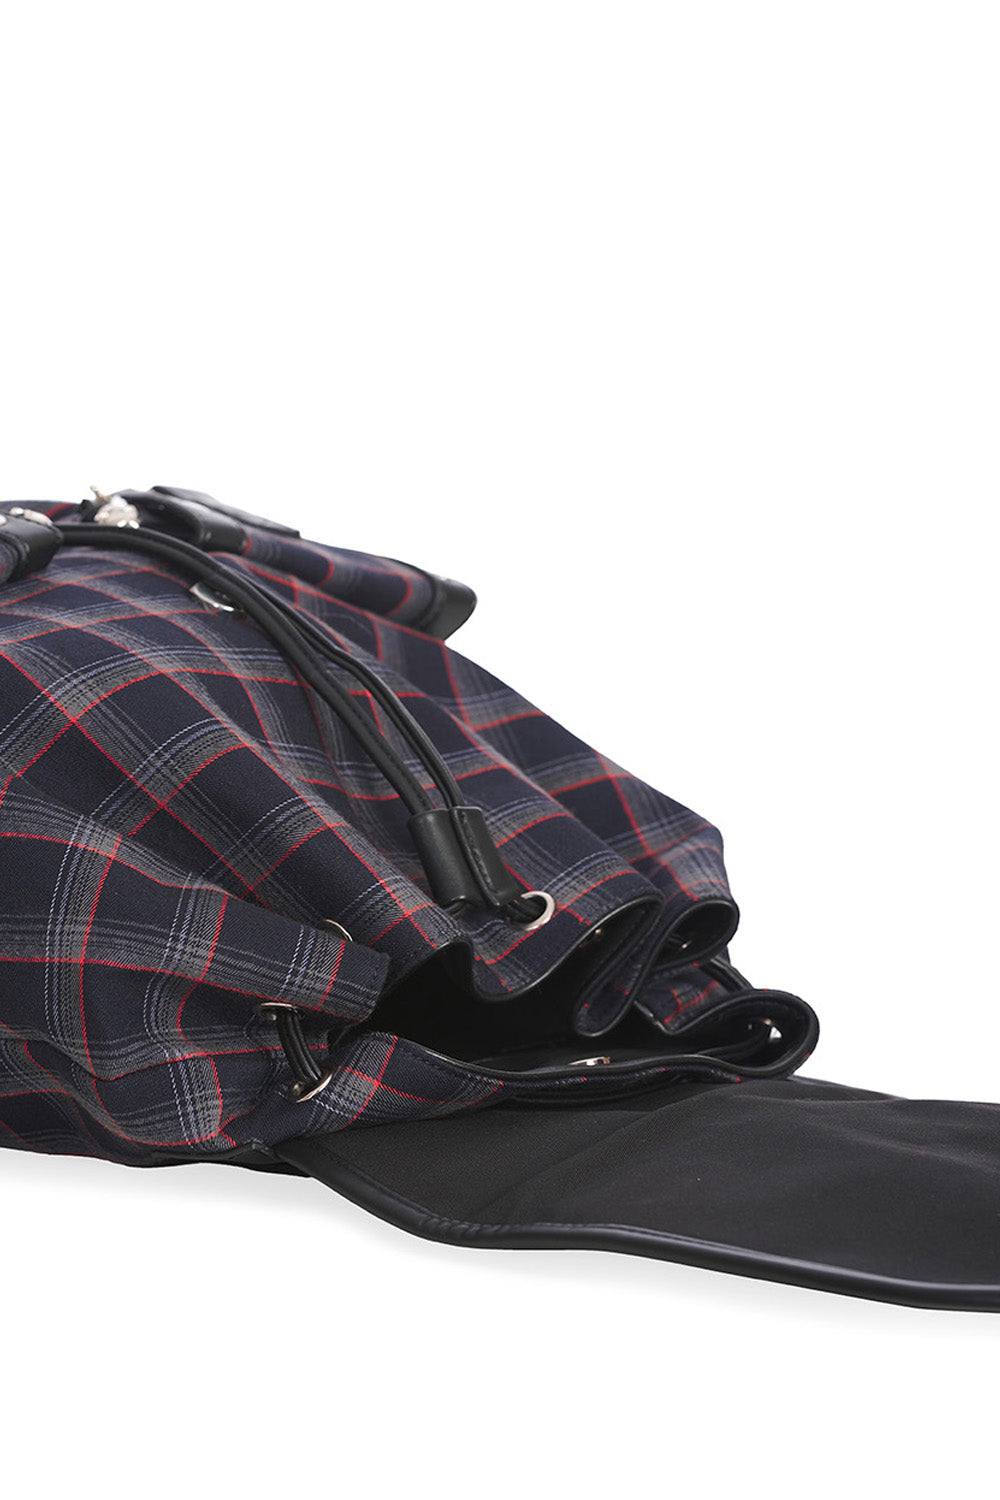 Lost Queen Yamy Tartan  Knapsack Plaid Punk Emo Handbag Backpack